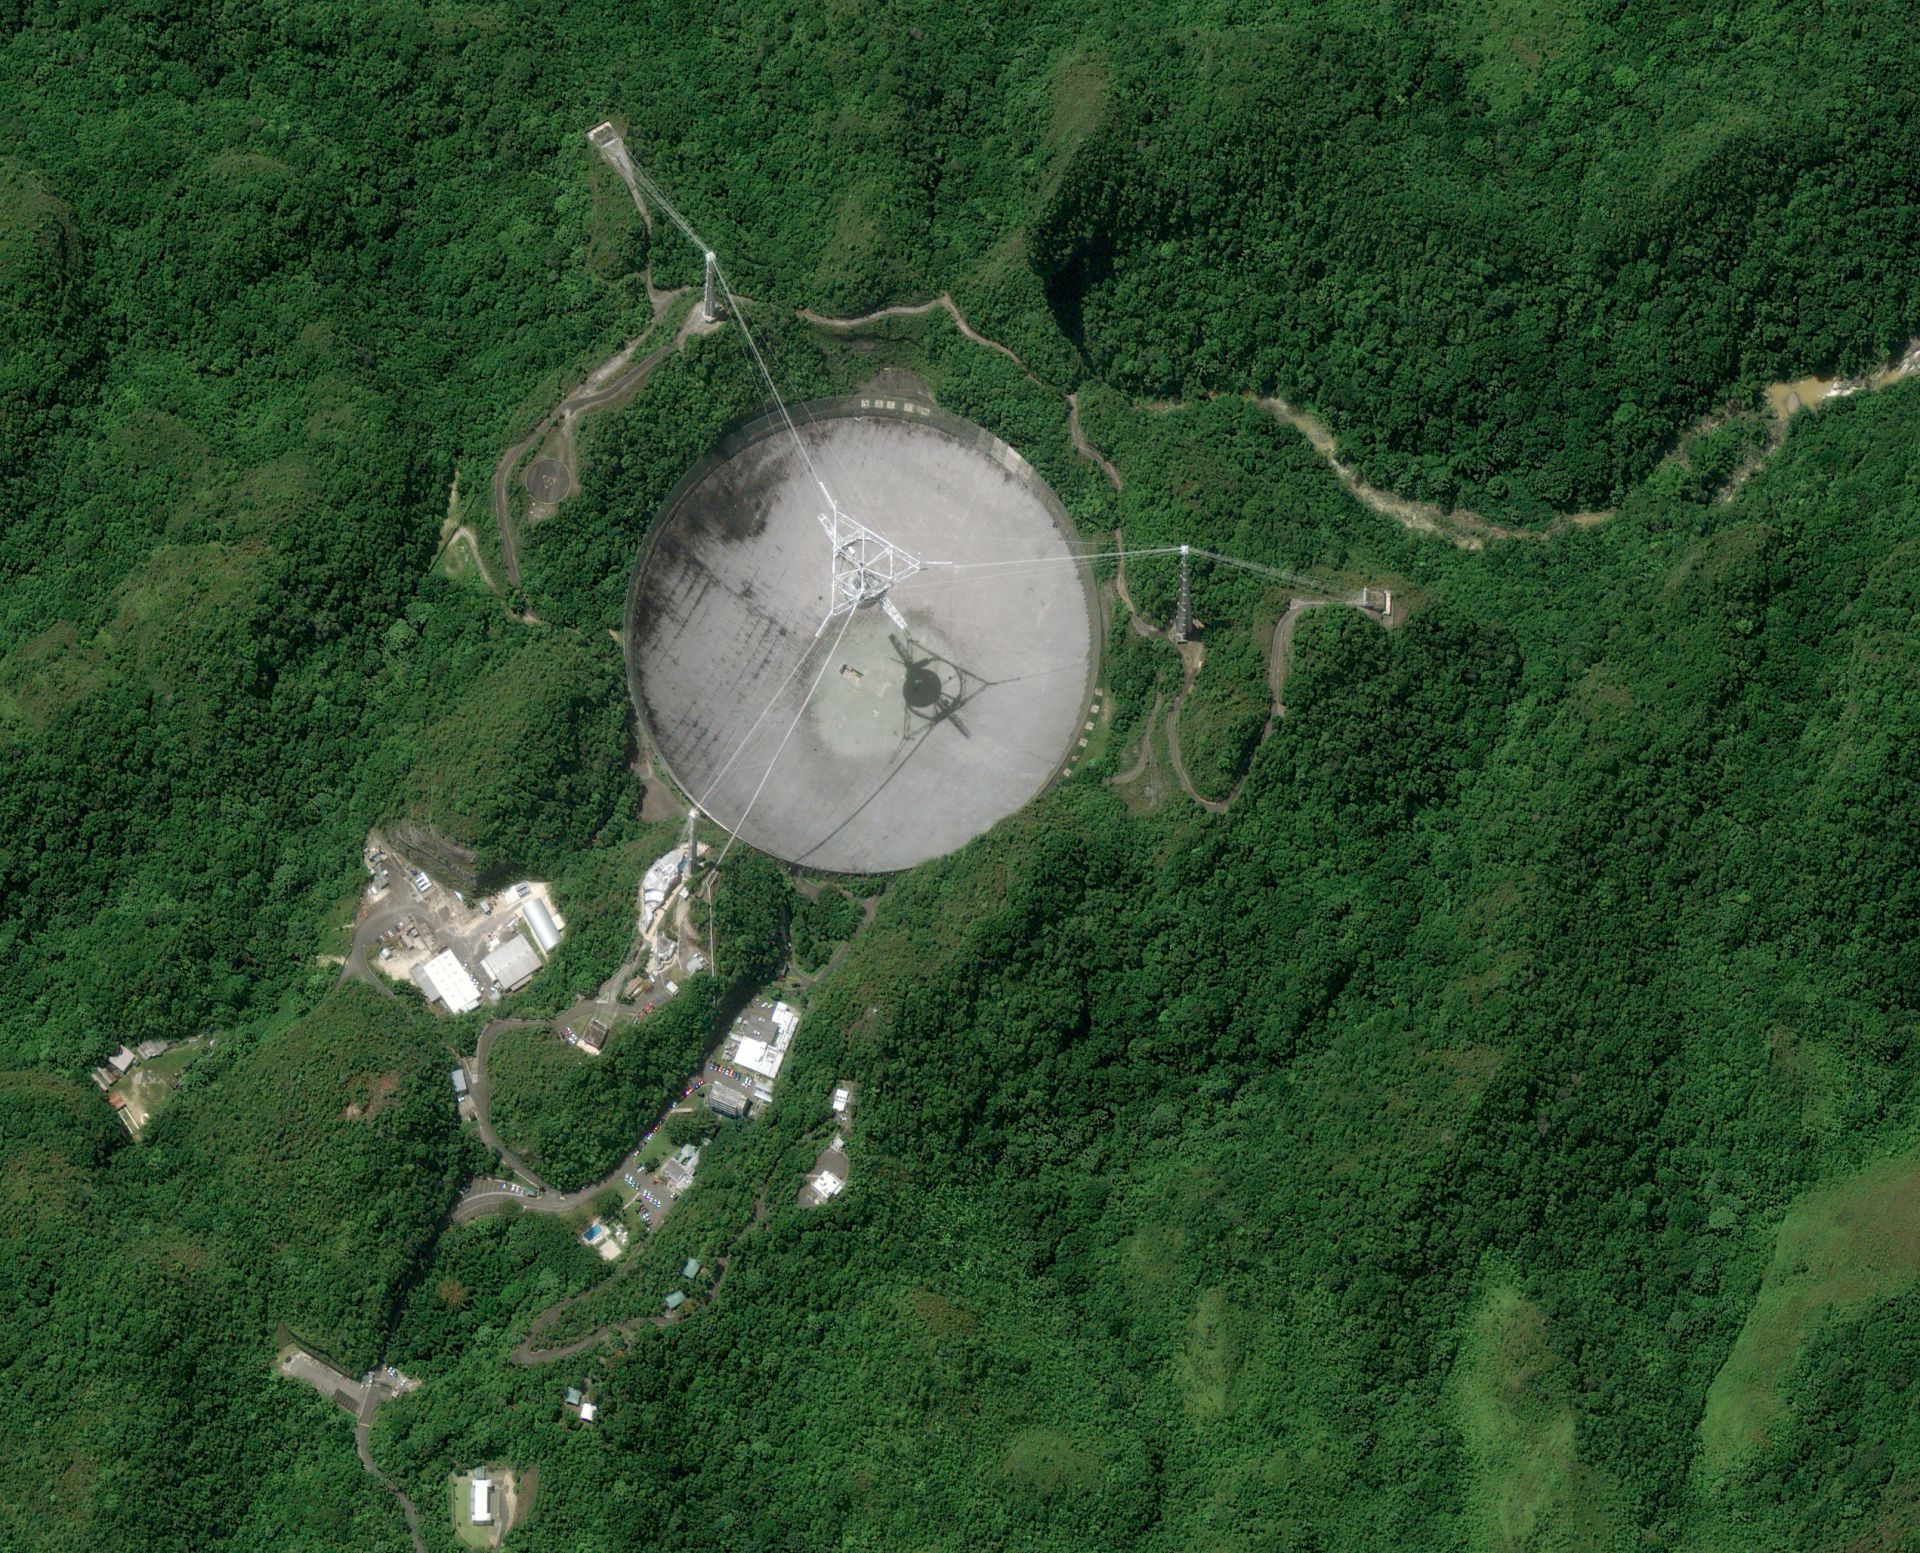 Radio télescope - Arecibo - Porto Rico - National Astronomy and Ionosphere Center - NAIC - GeoEye-1 - Digital Globe - satellite - GoldenEye - James Bond